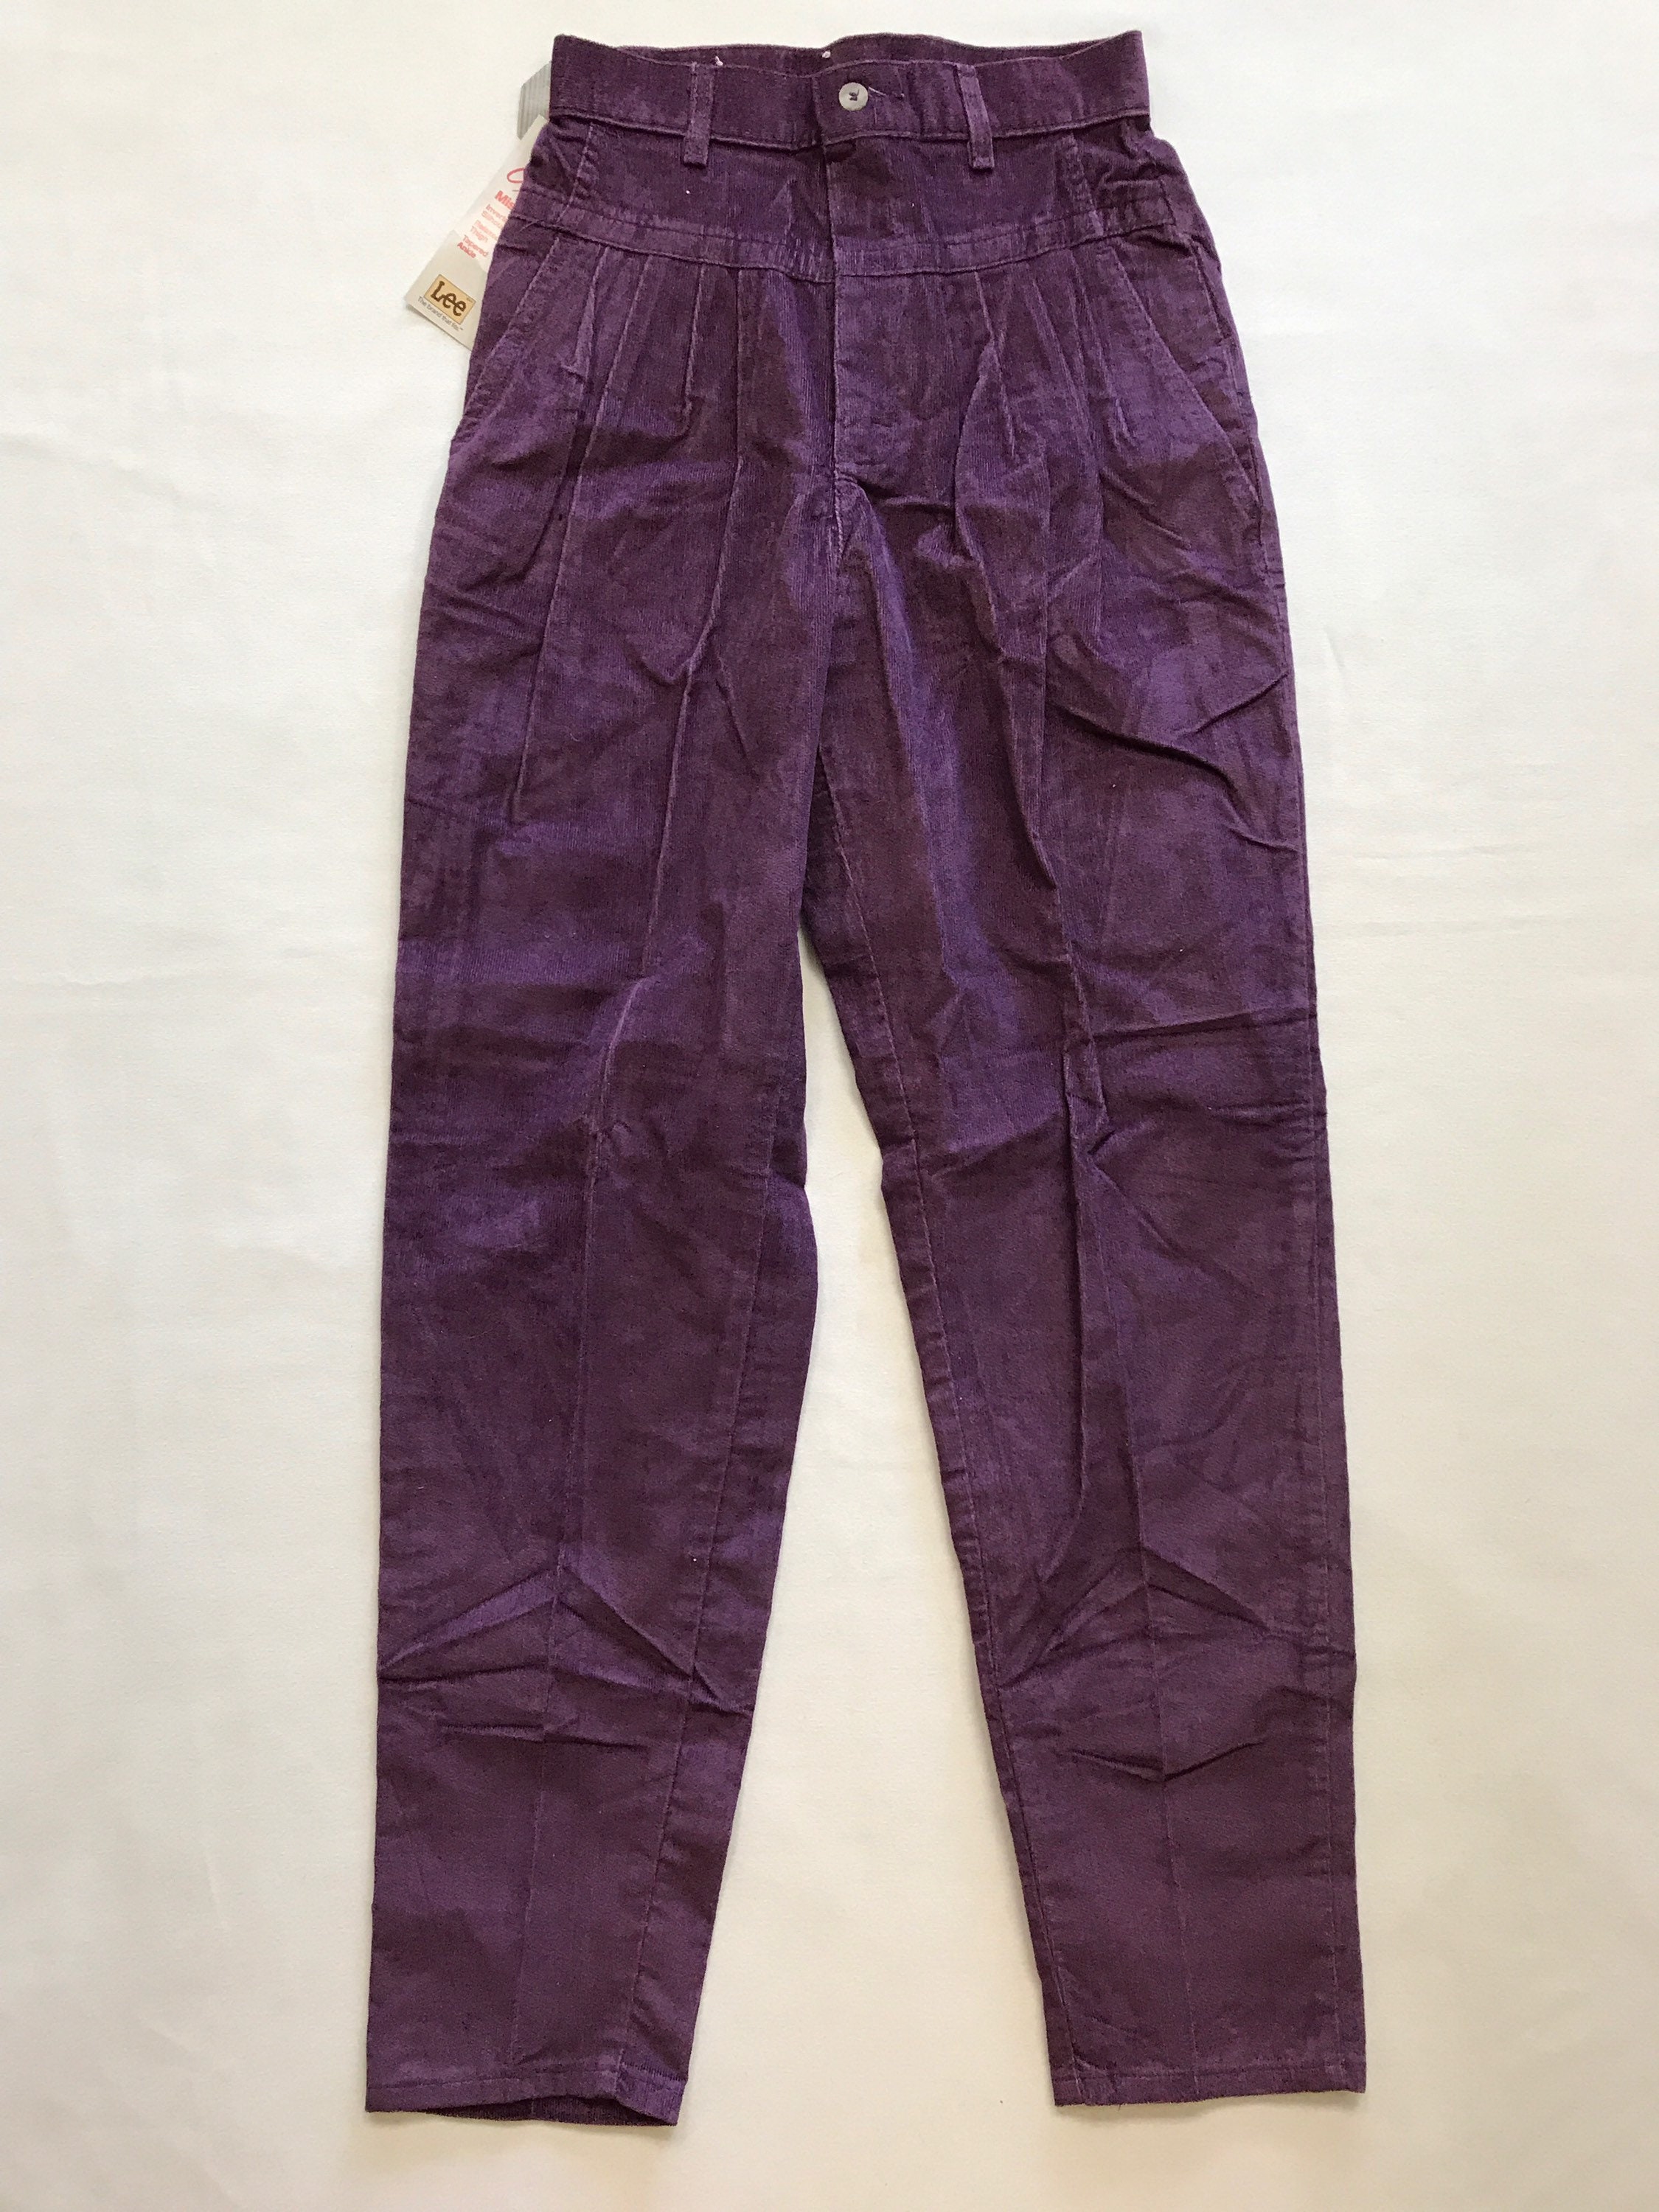 1980s Lee Casuals Purple Corduroy Pants Misses Teens Size 6 | Etsy